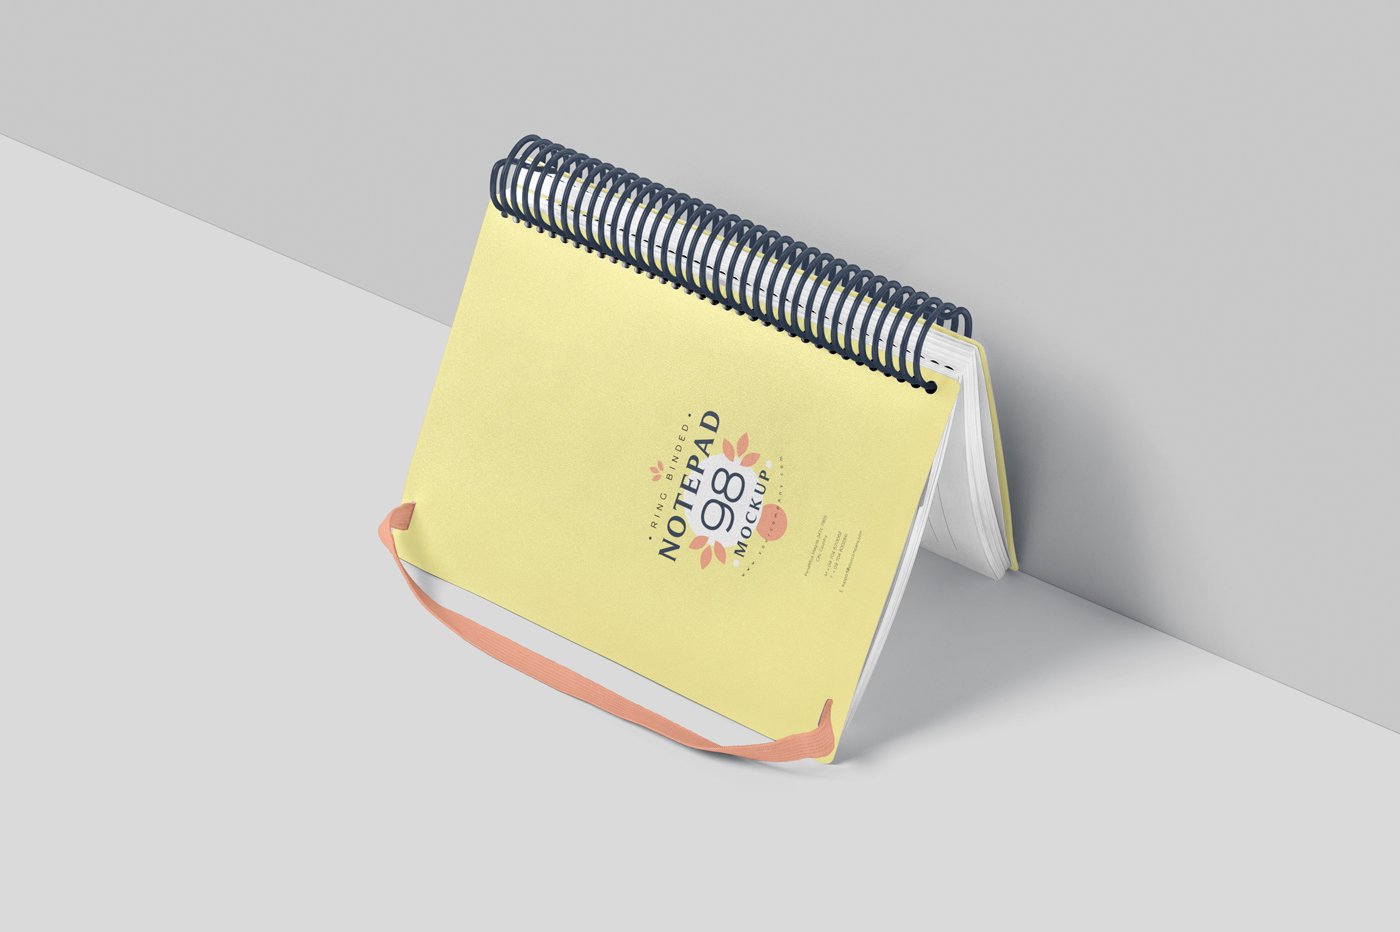 Minimalistic notebook design.